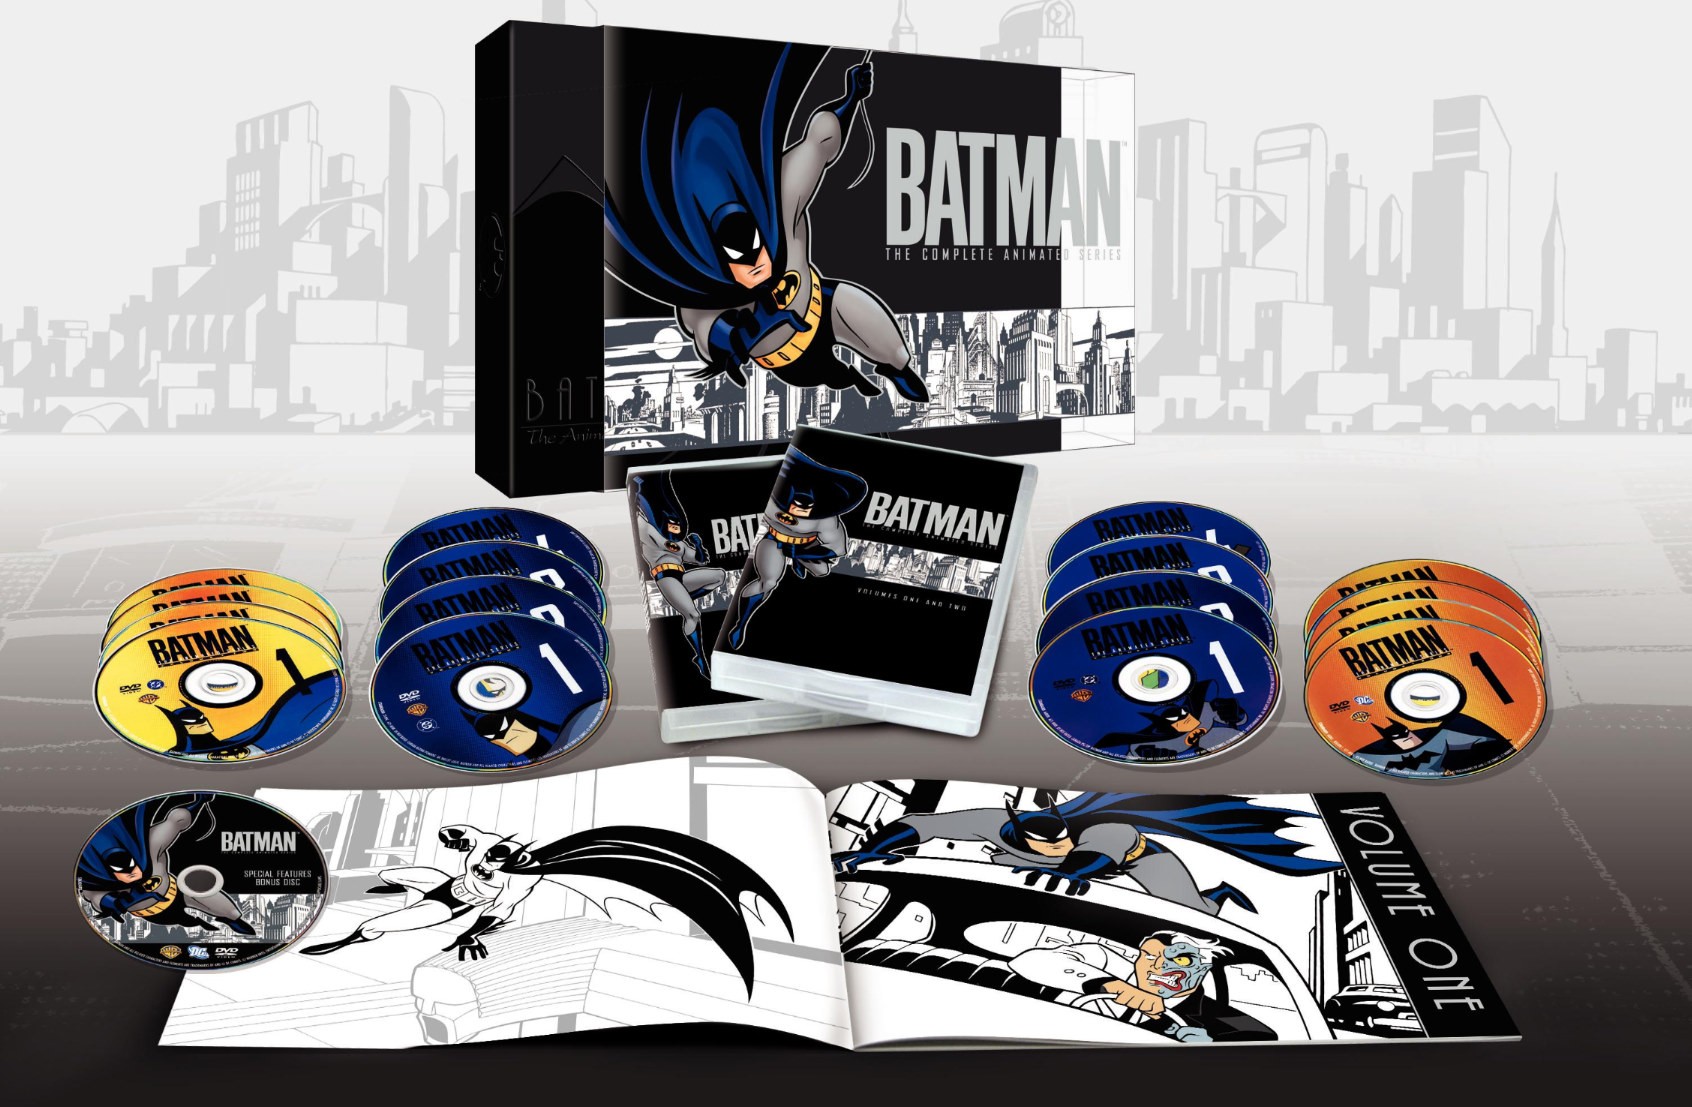 Batman_The_Complete_Animated_Series.jpg